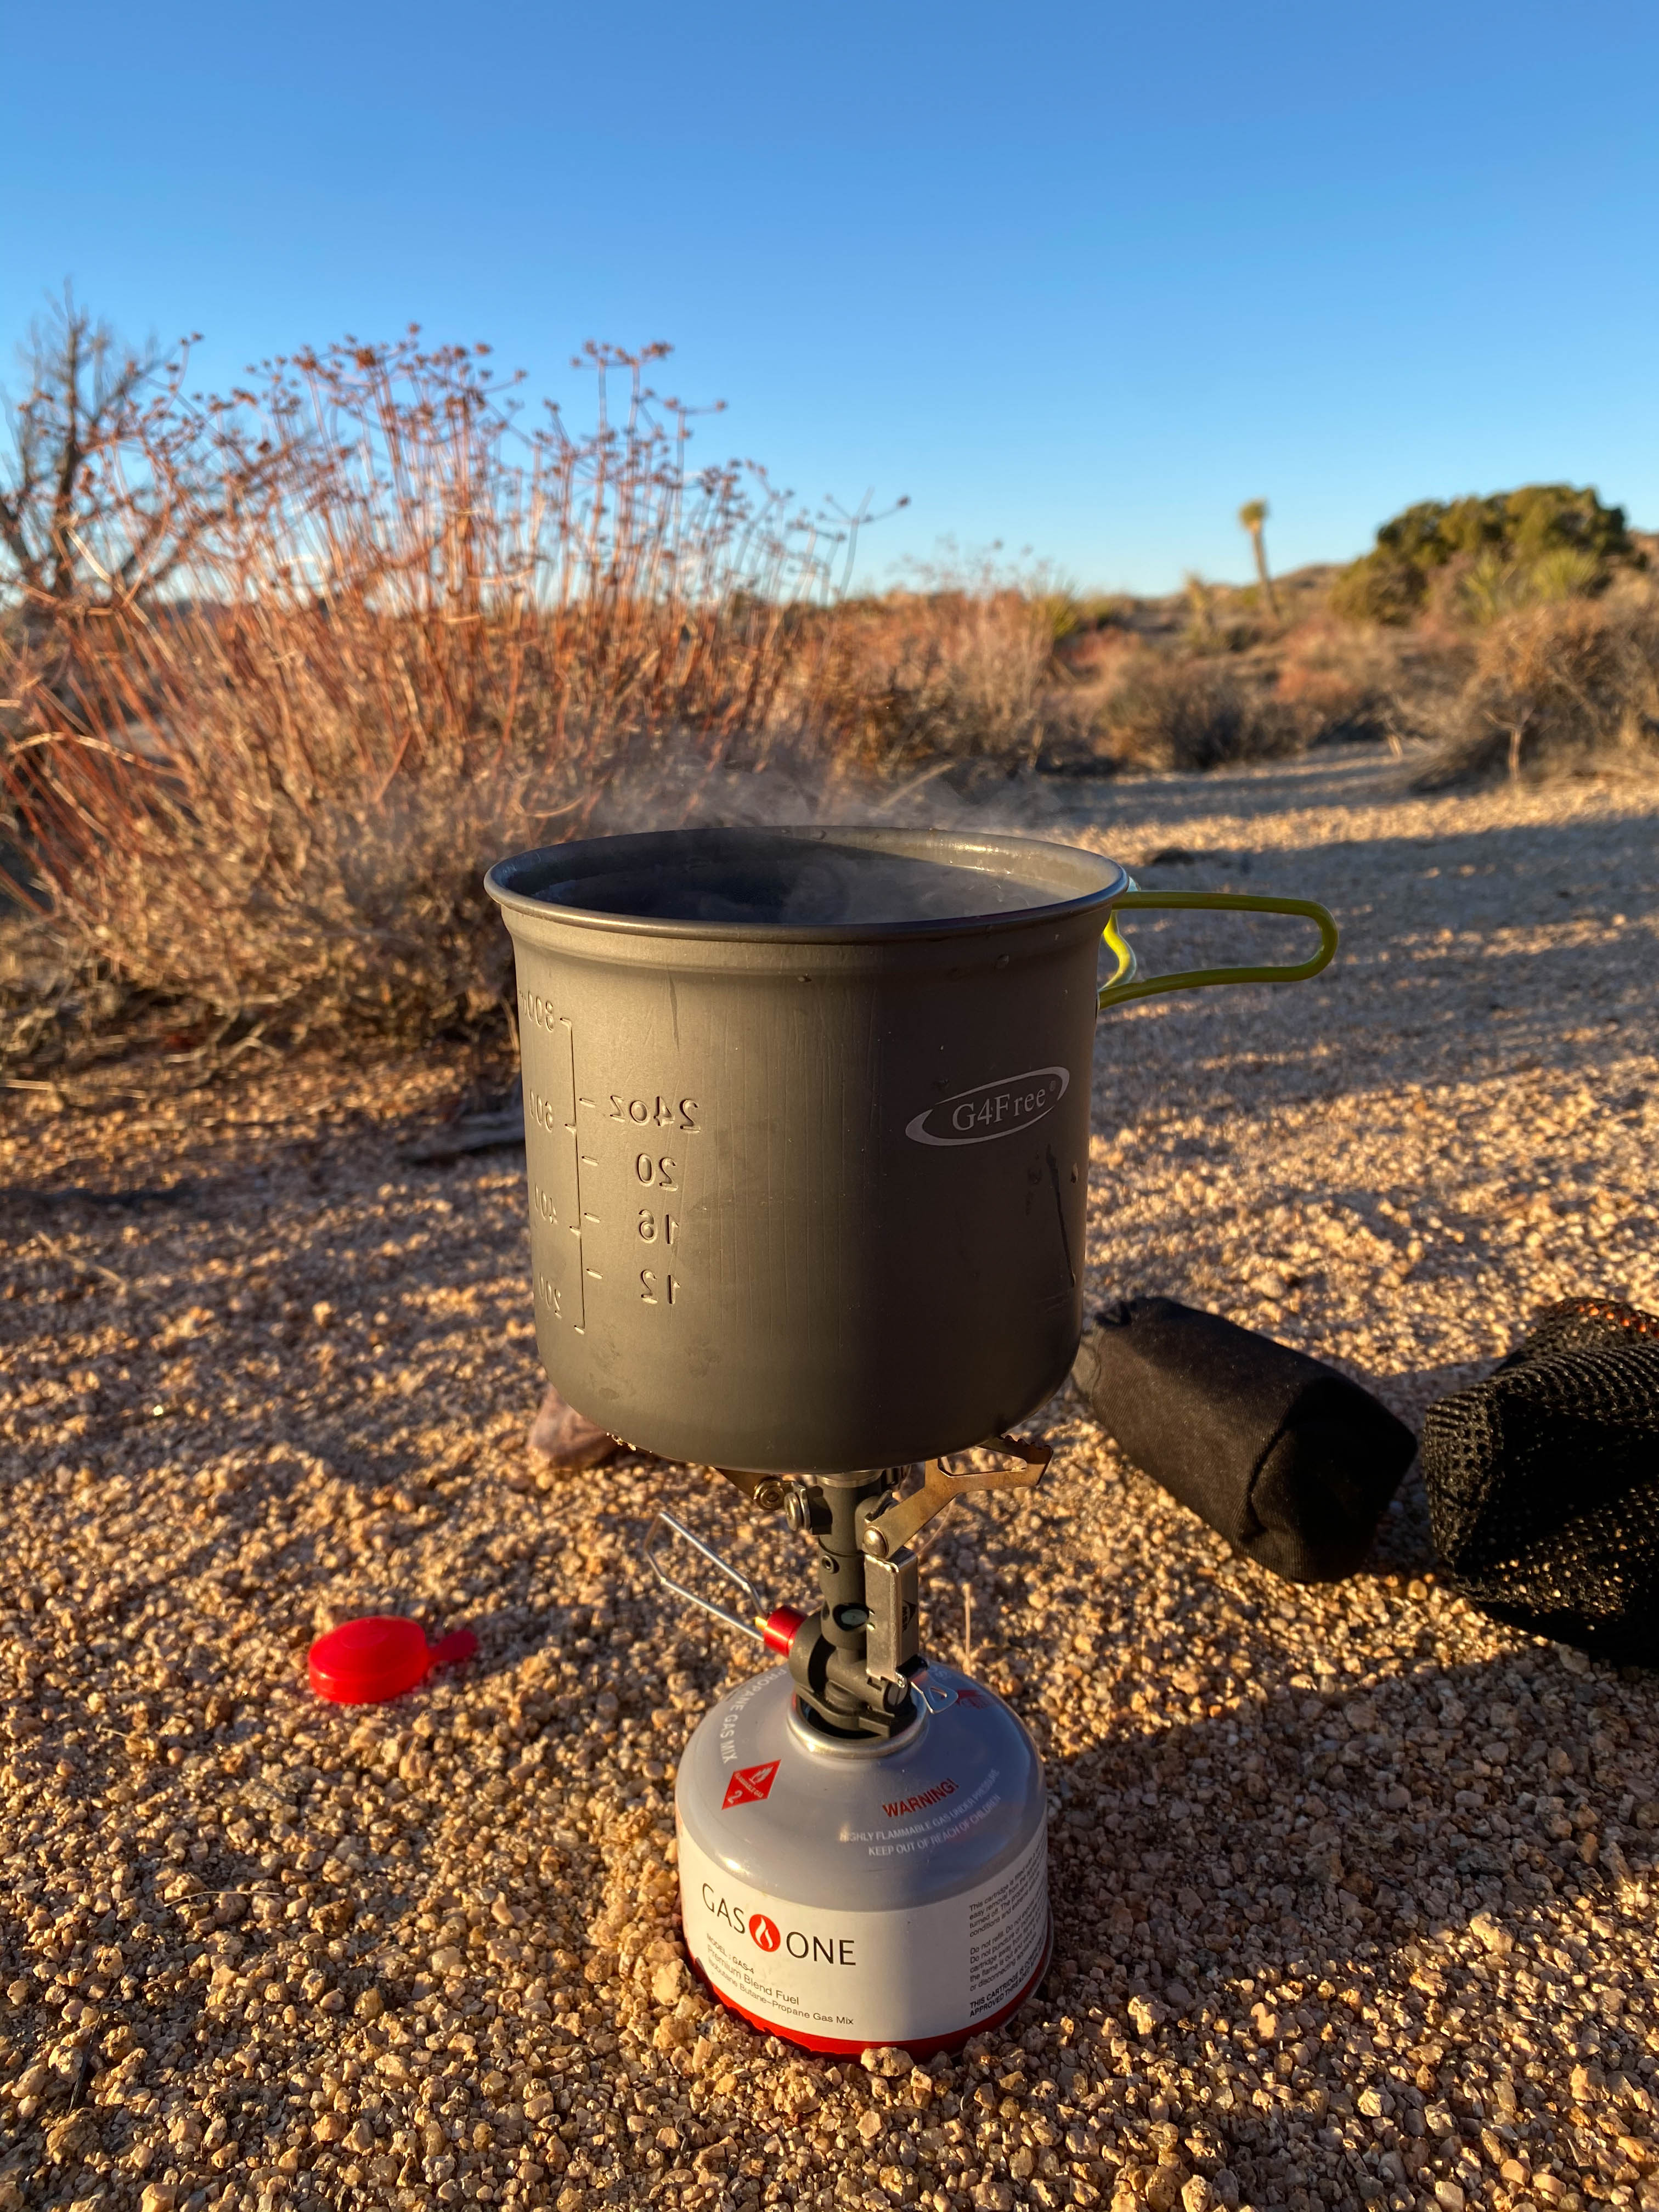 Camping stove for Joshua Tree